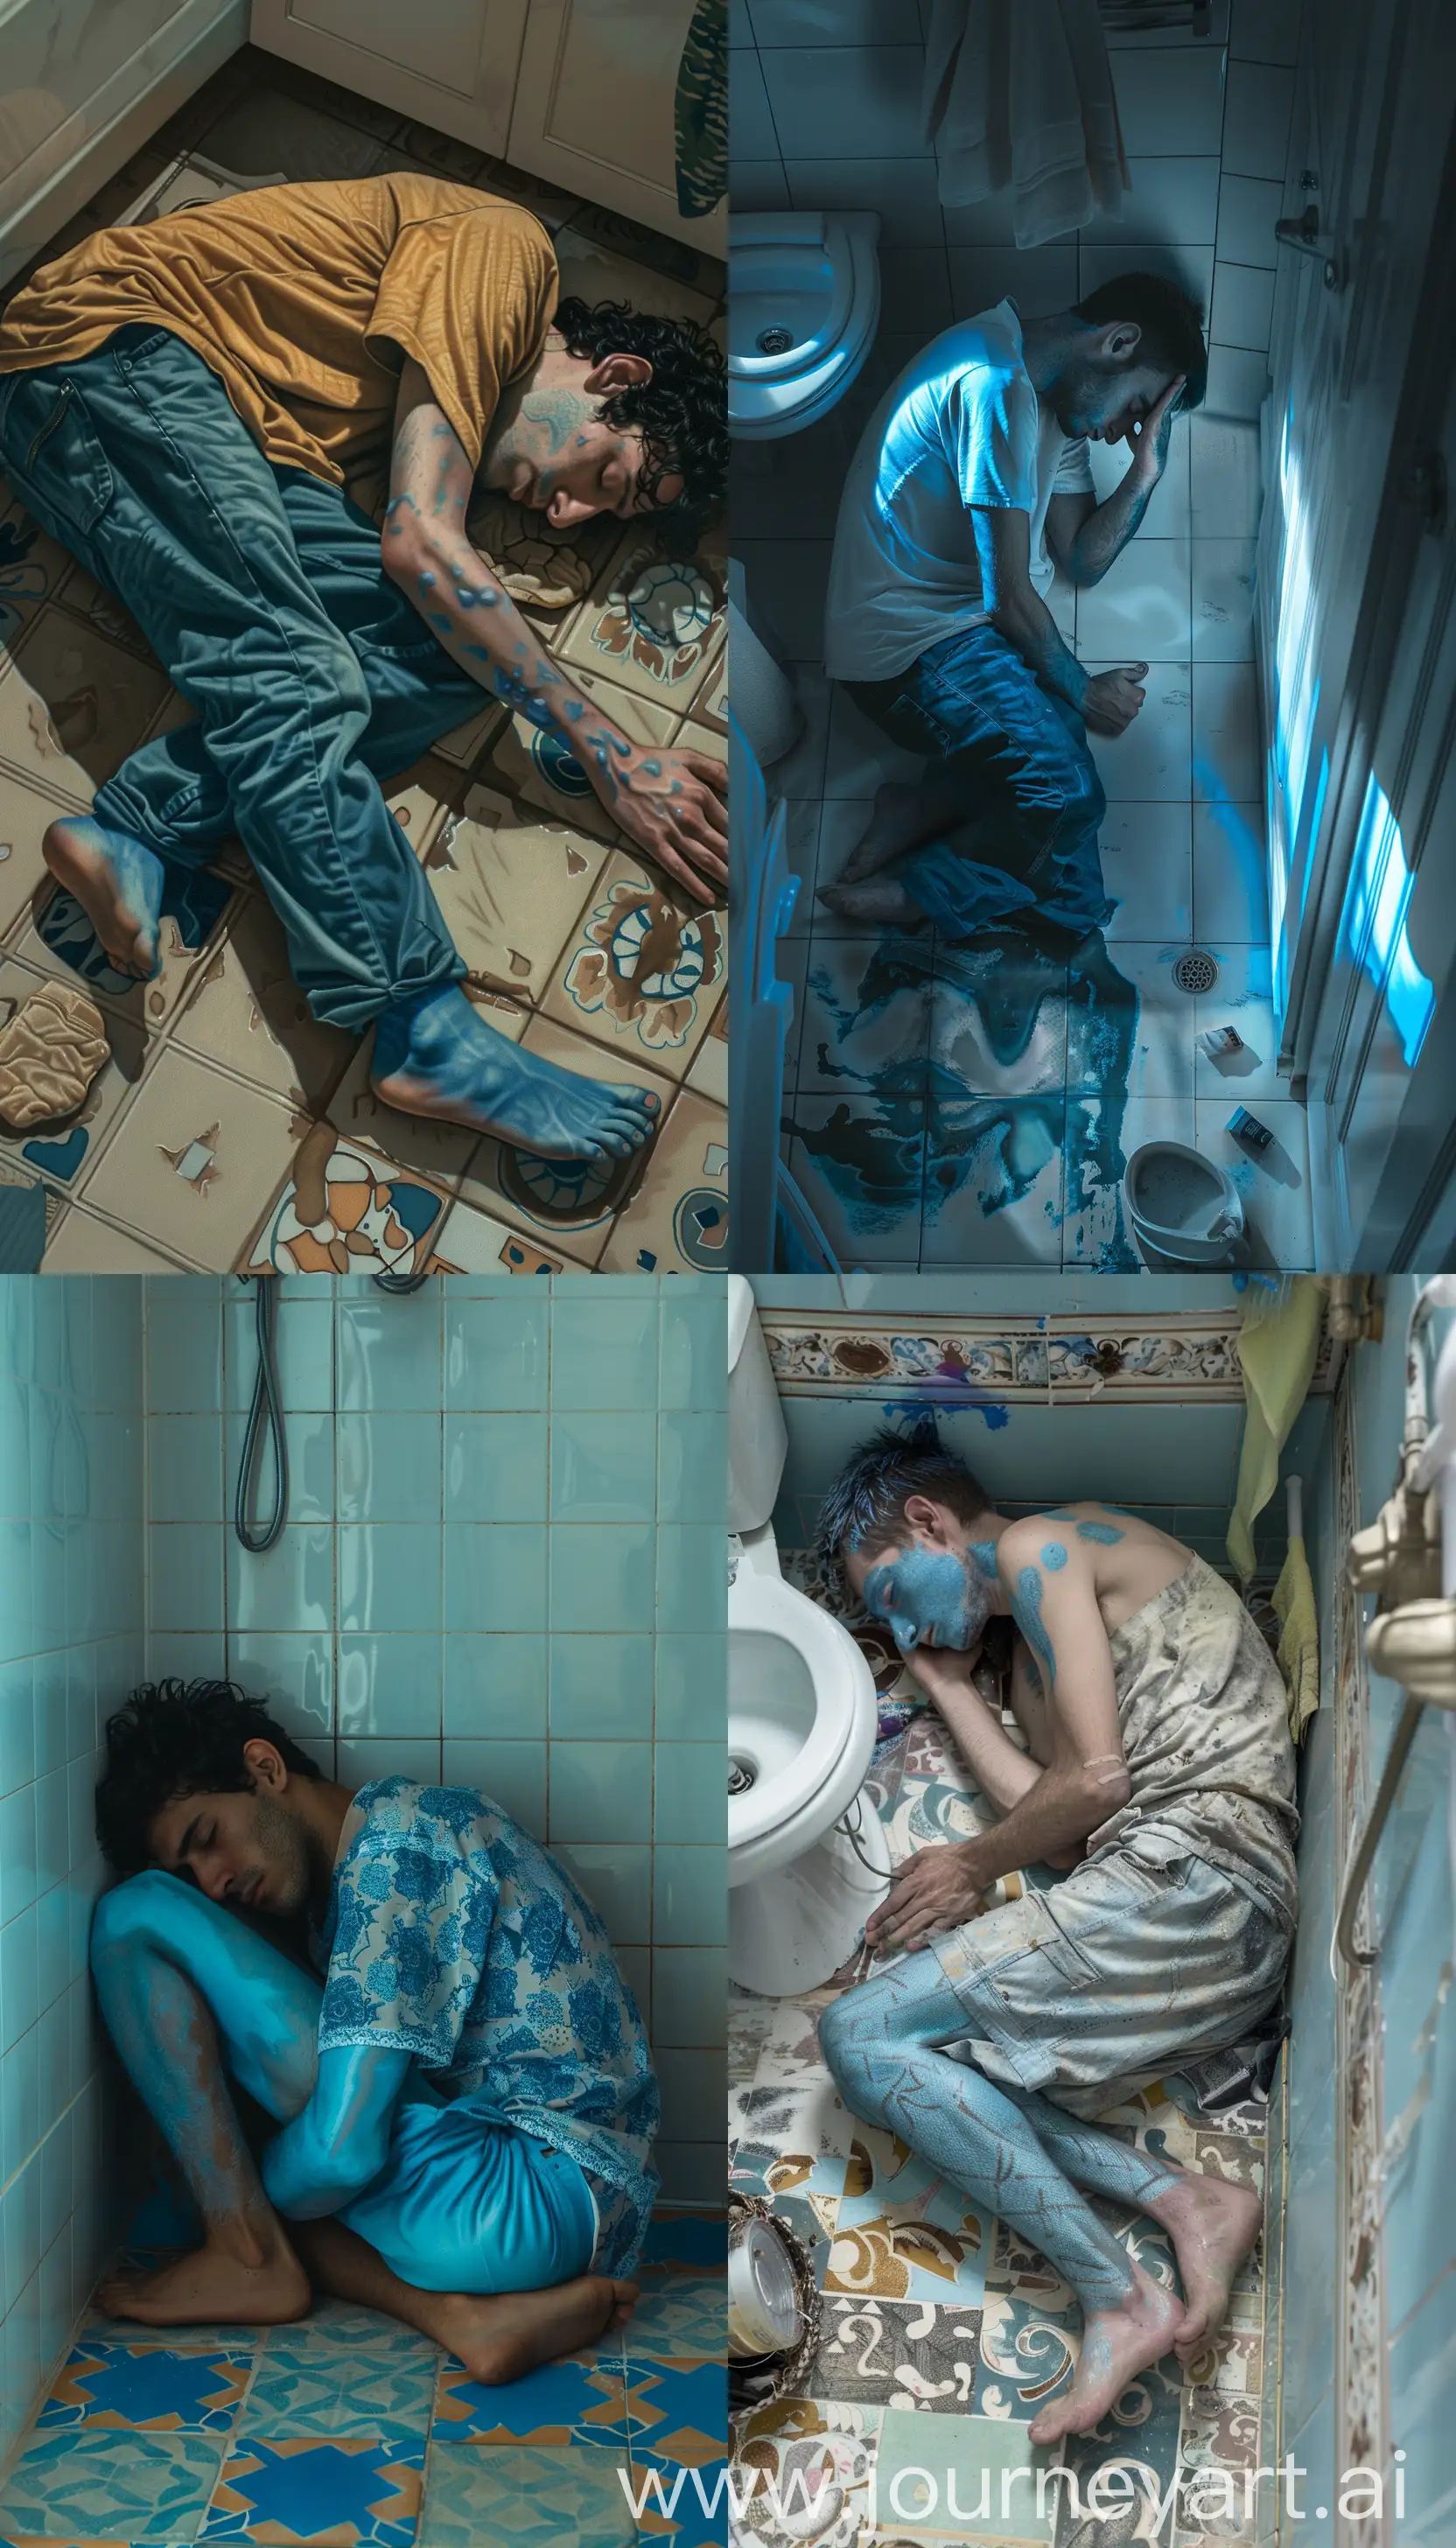 Peaceful-Slumber-Man-Resting-on-Bathroom-Floor-with-Blue-Glow